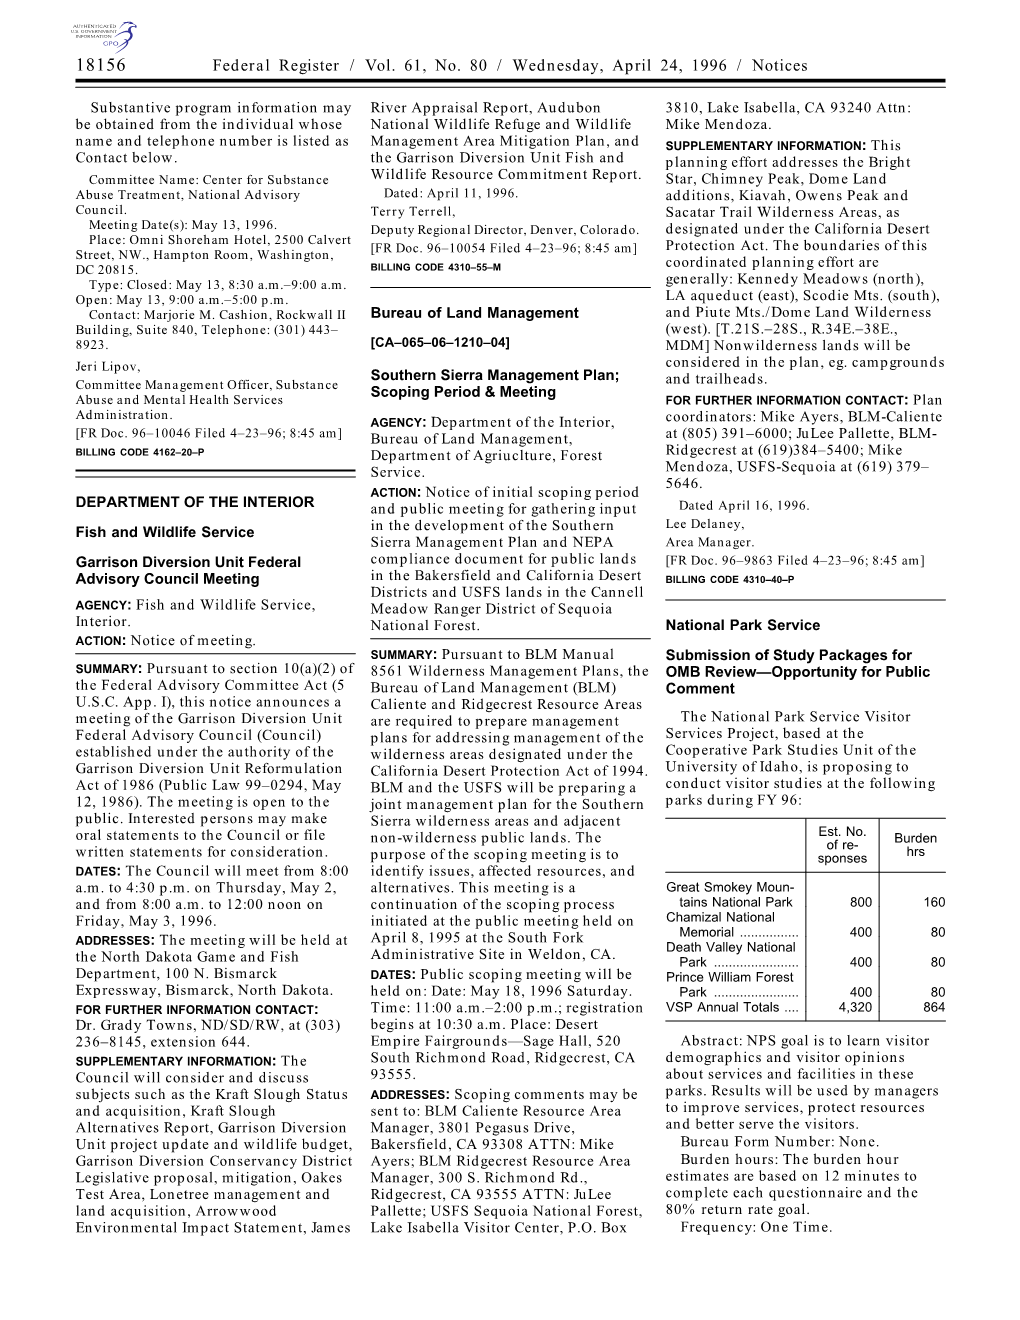 Federal Register / Vol. 61, No. 80 / Wednesday, April 24, 1996 / Notices